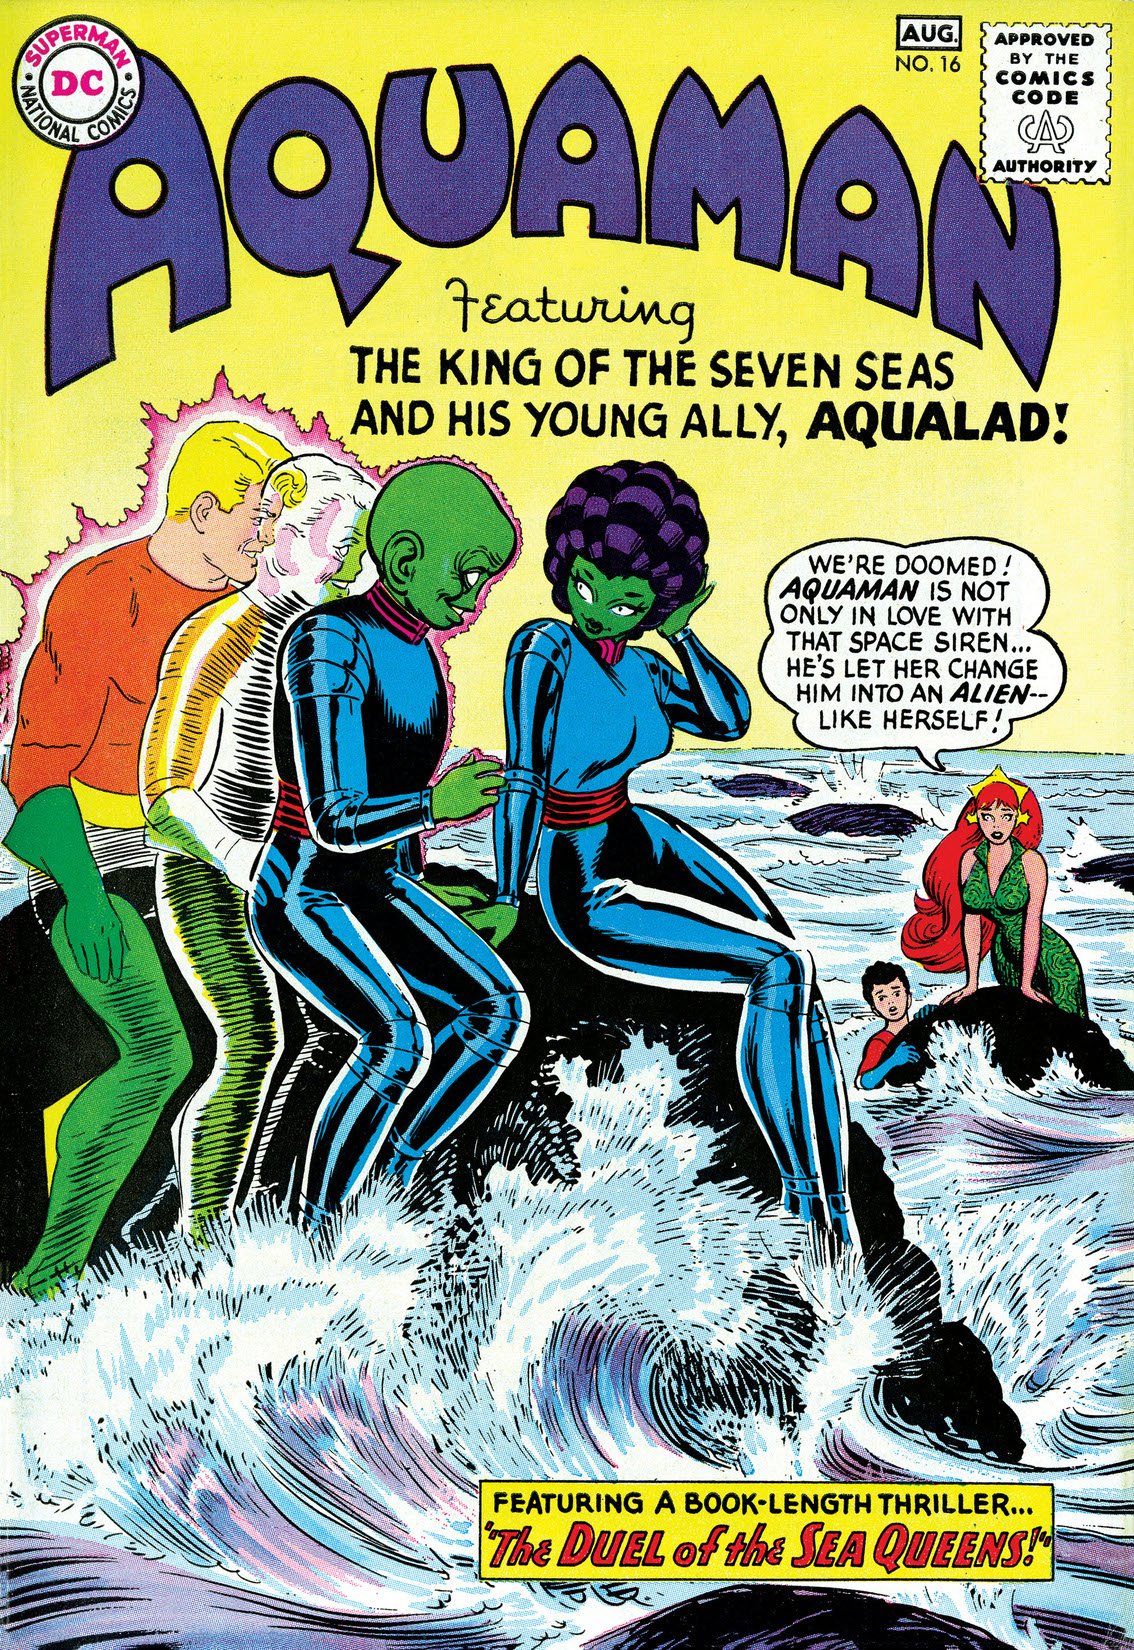 Aquaman (1962-) #16 preview images